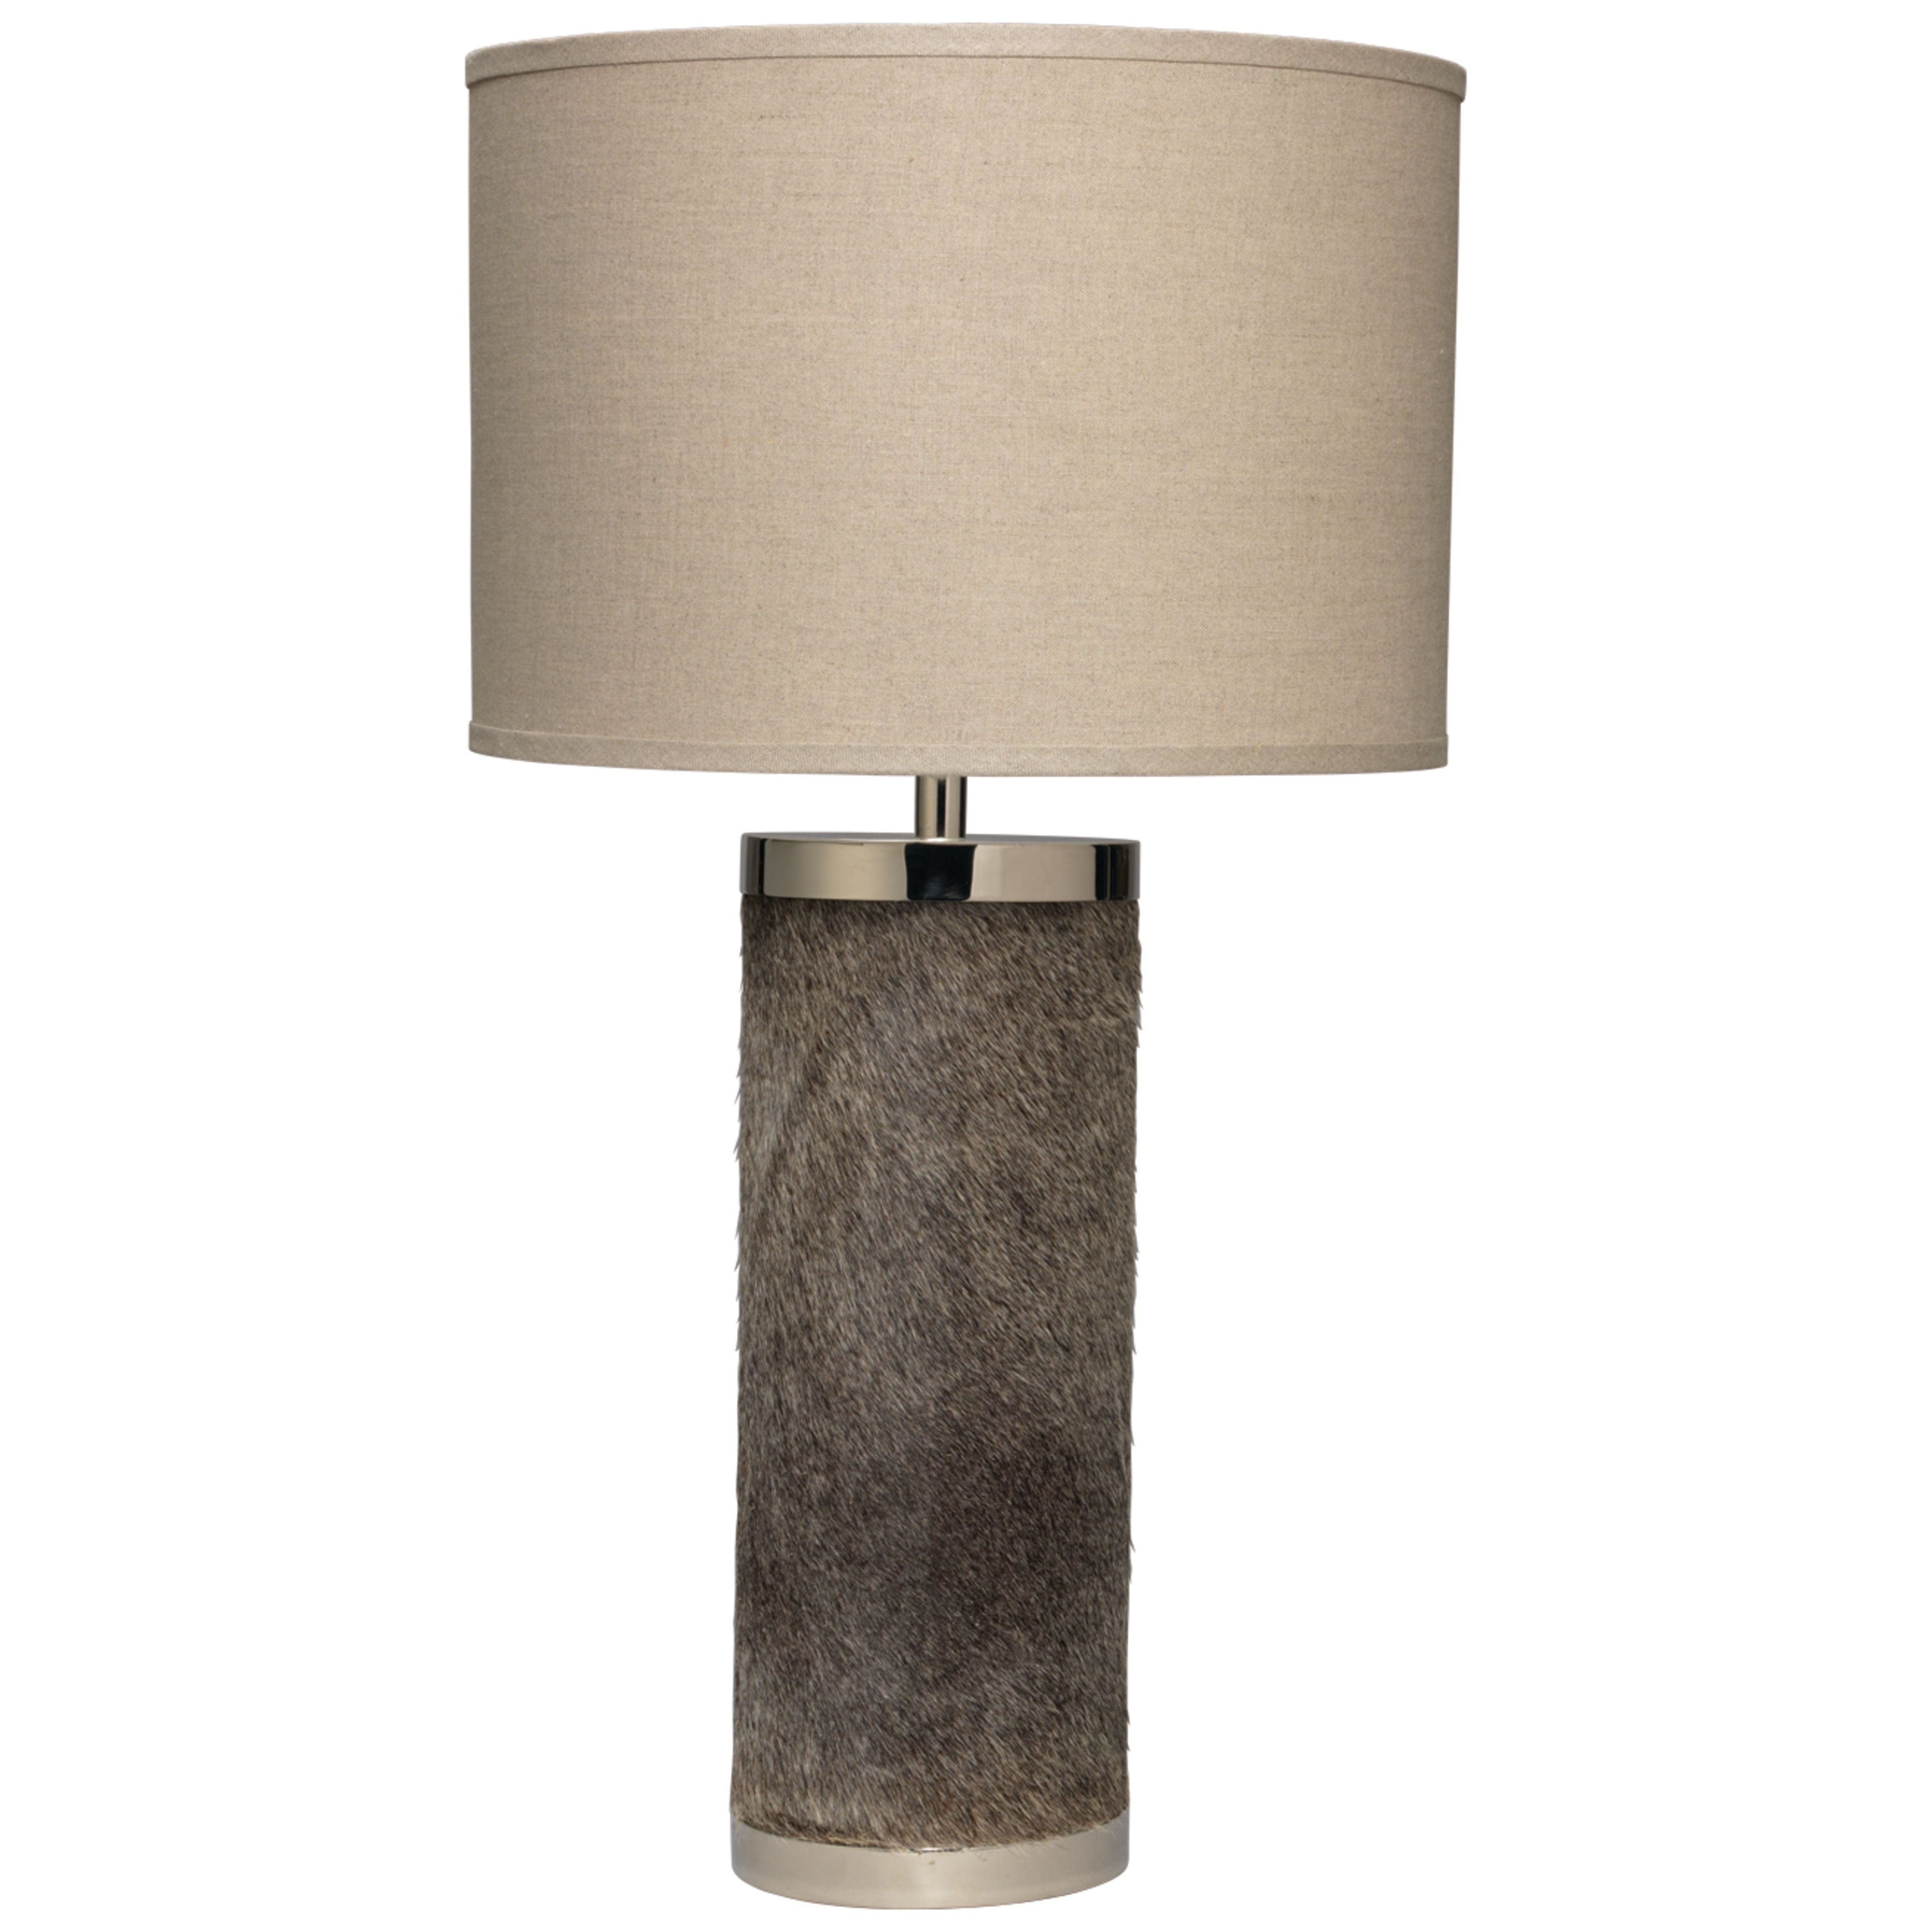 Jamie Young Company - 1COLU-TLGH - Column Table Lamp - Column - Grey